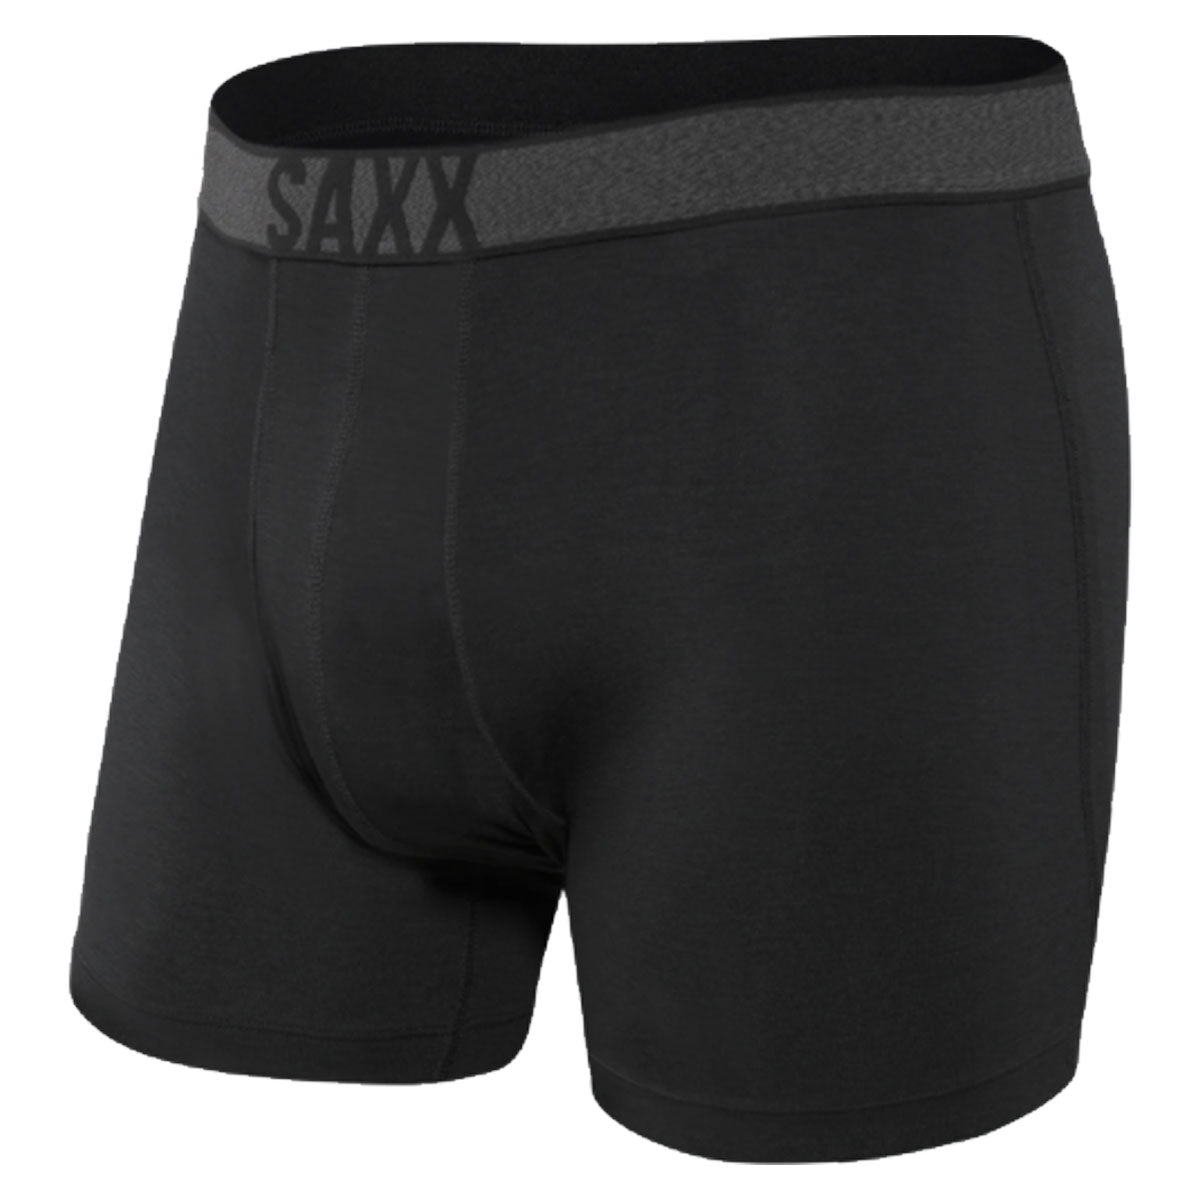 SAXX Viewfinder Boxer Brief in  by GOHUNT | SAXX - GOHUNT Shop